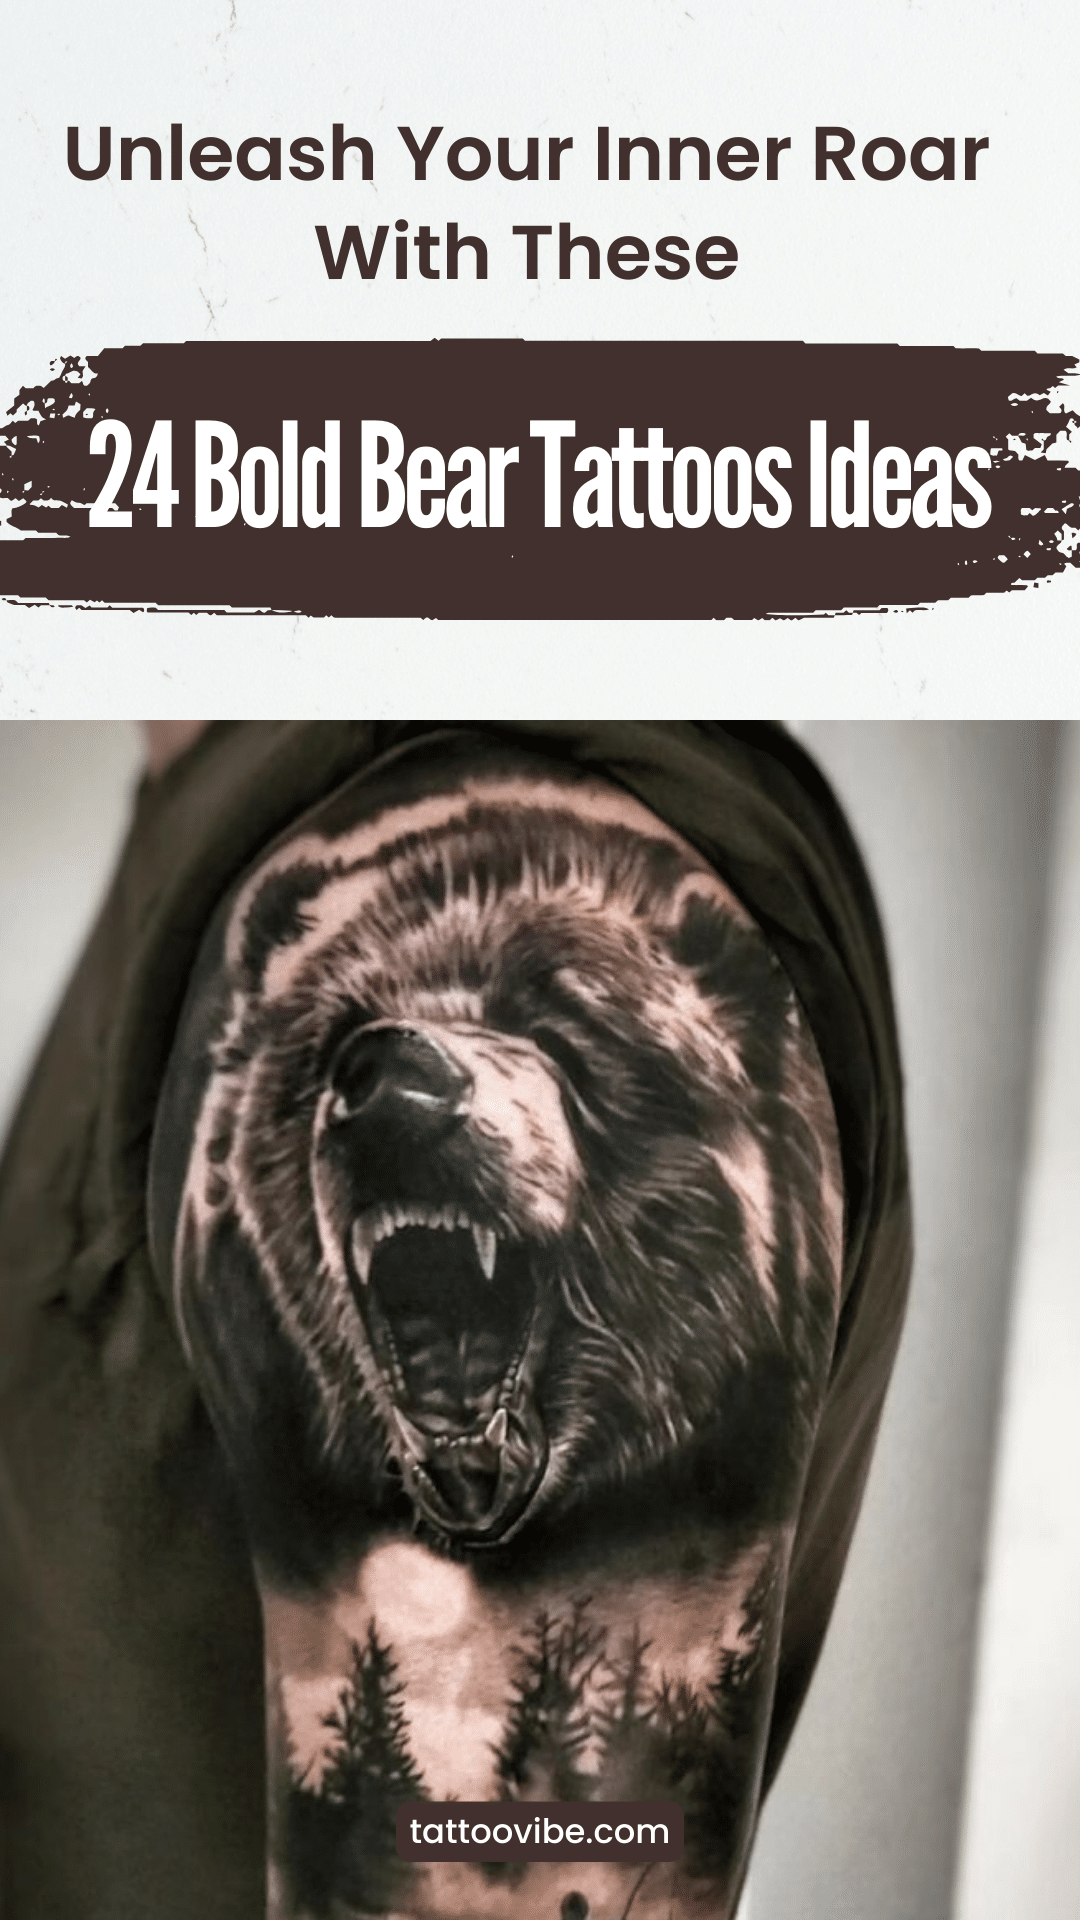 24 Bold Bear Tattoo Ideas